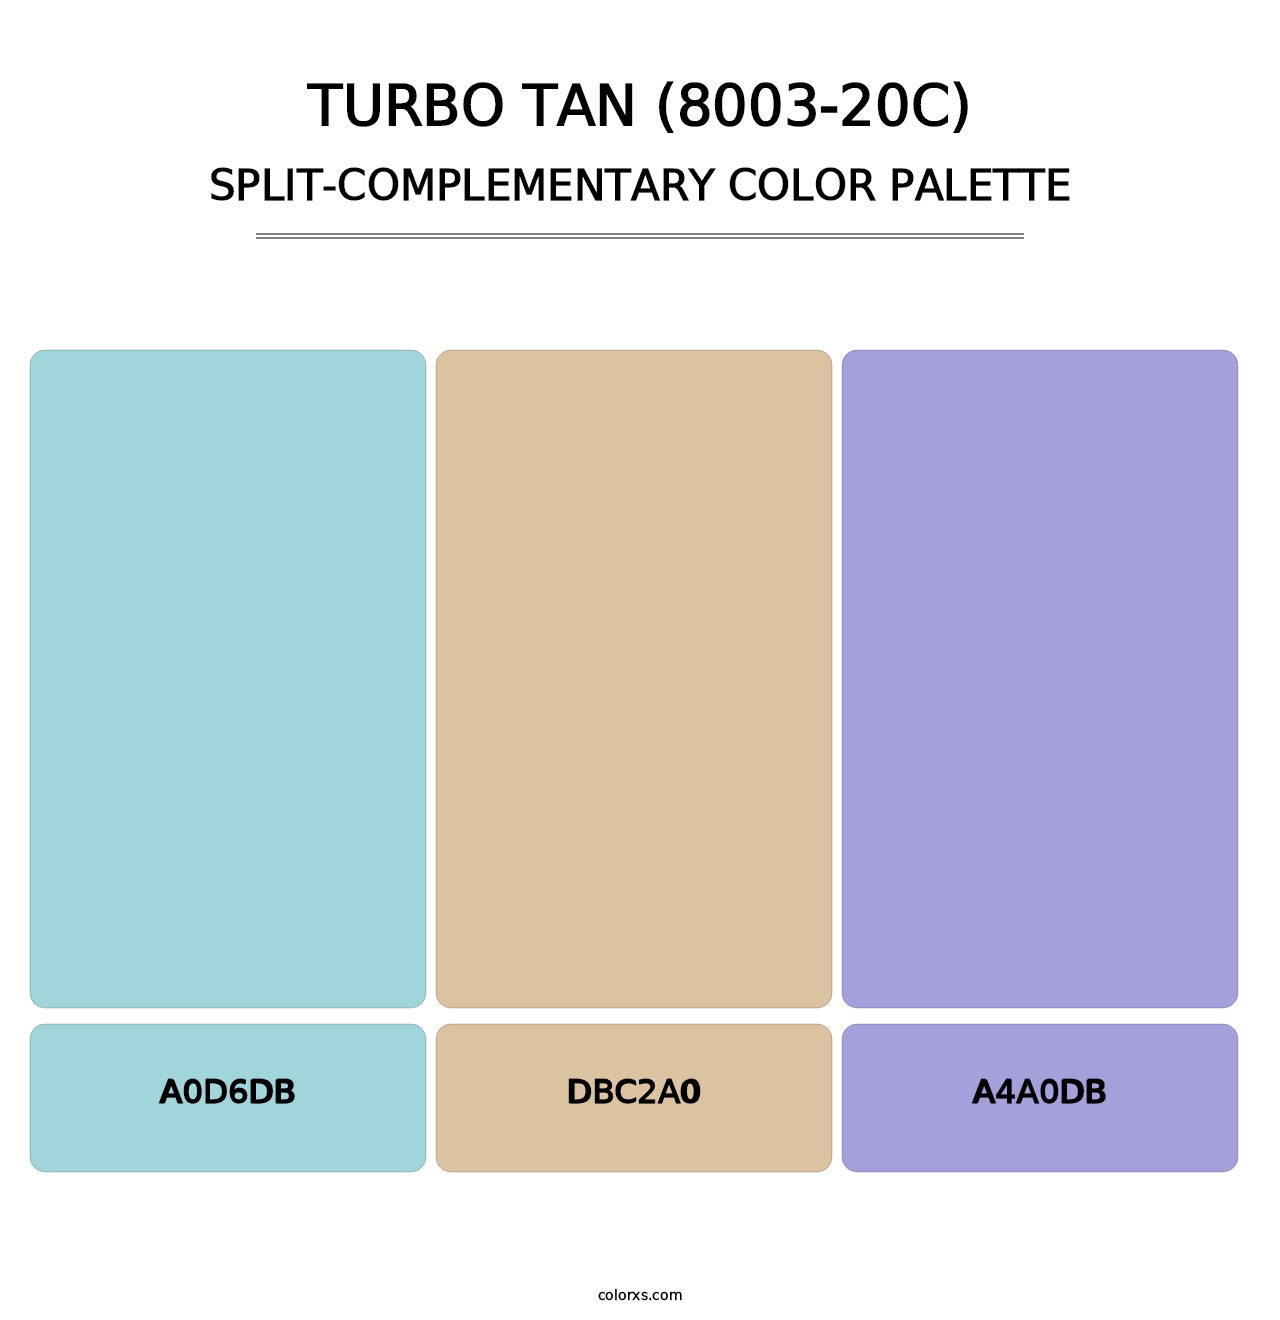 Turbo Tan (8003-20C) - Split-Complementary Color Palette